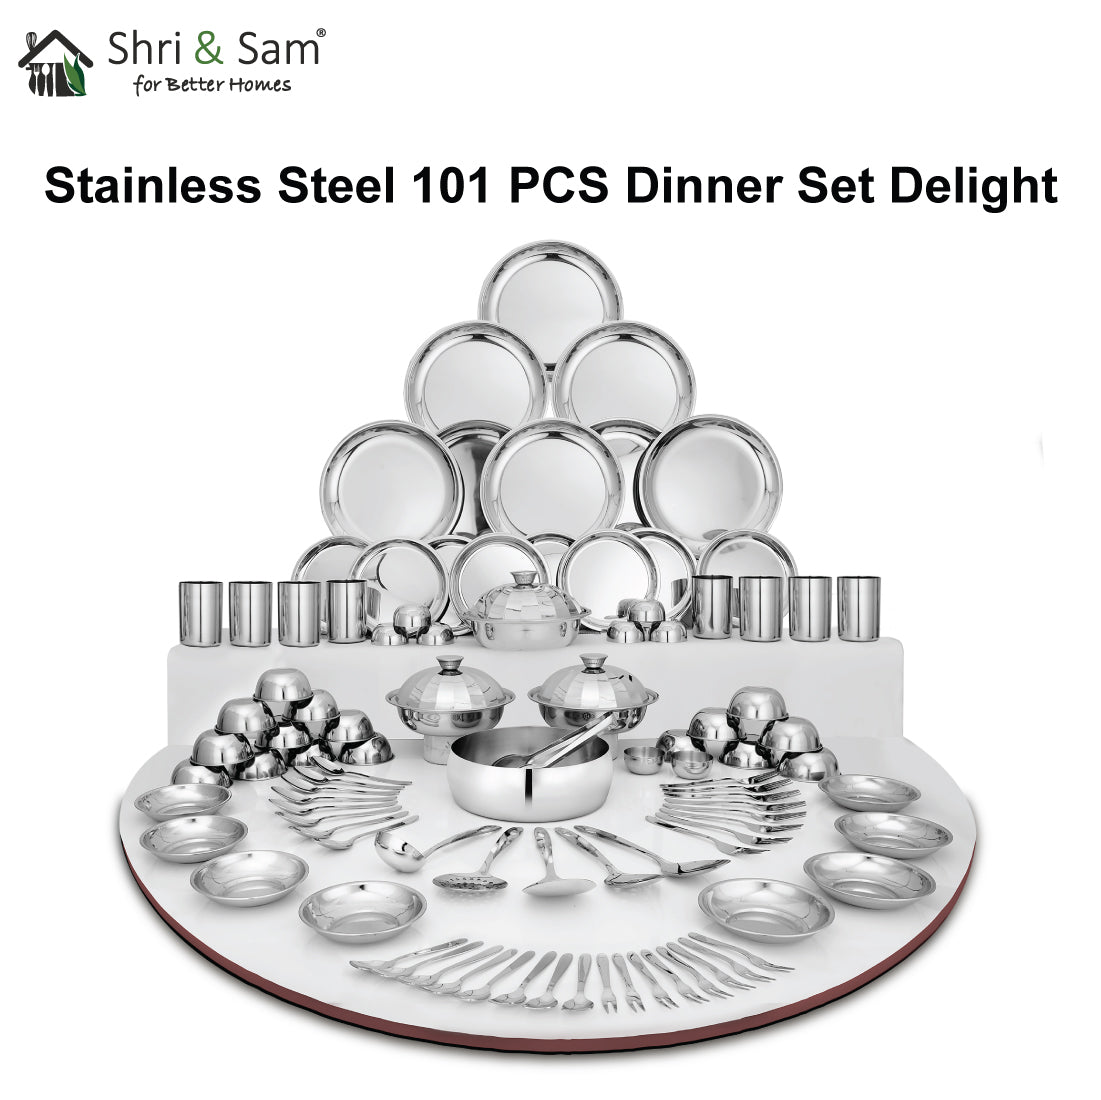 Stainless Steel 101 PCS Dinner set (8 People) Delight